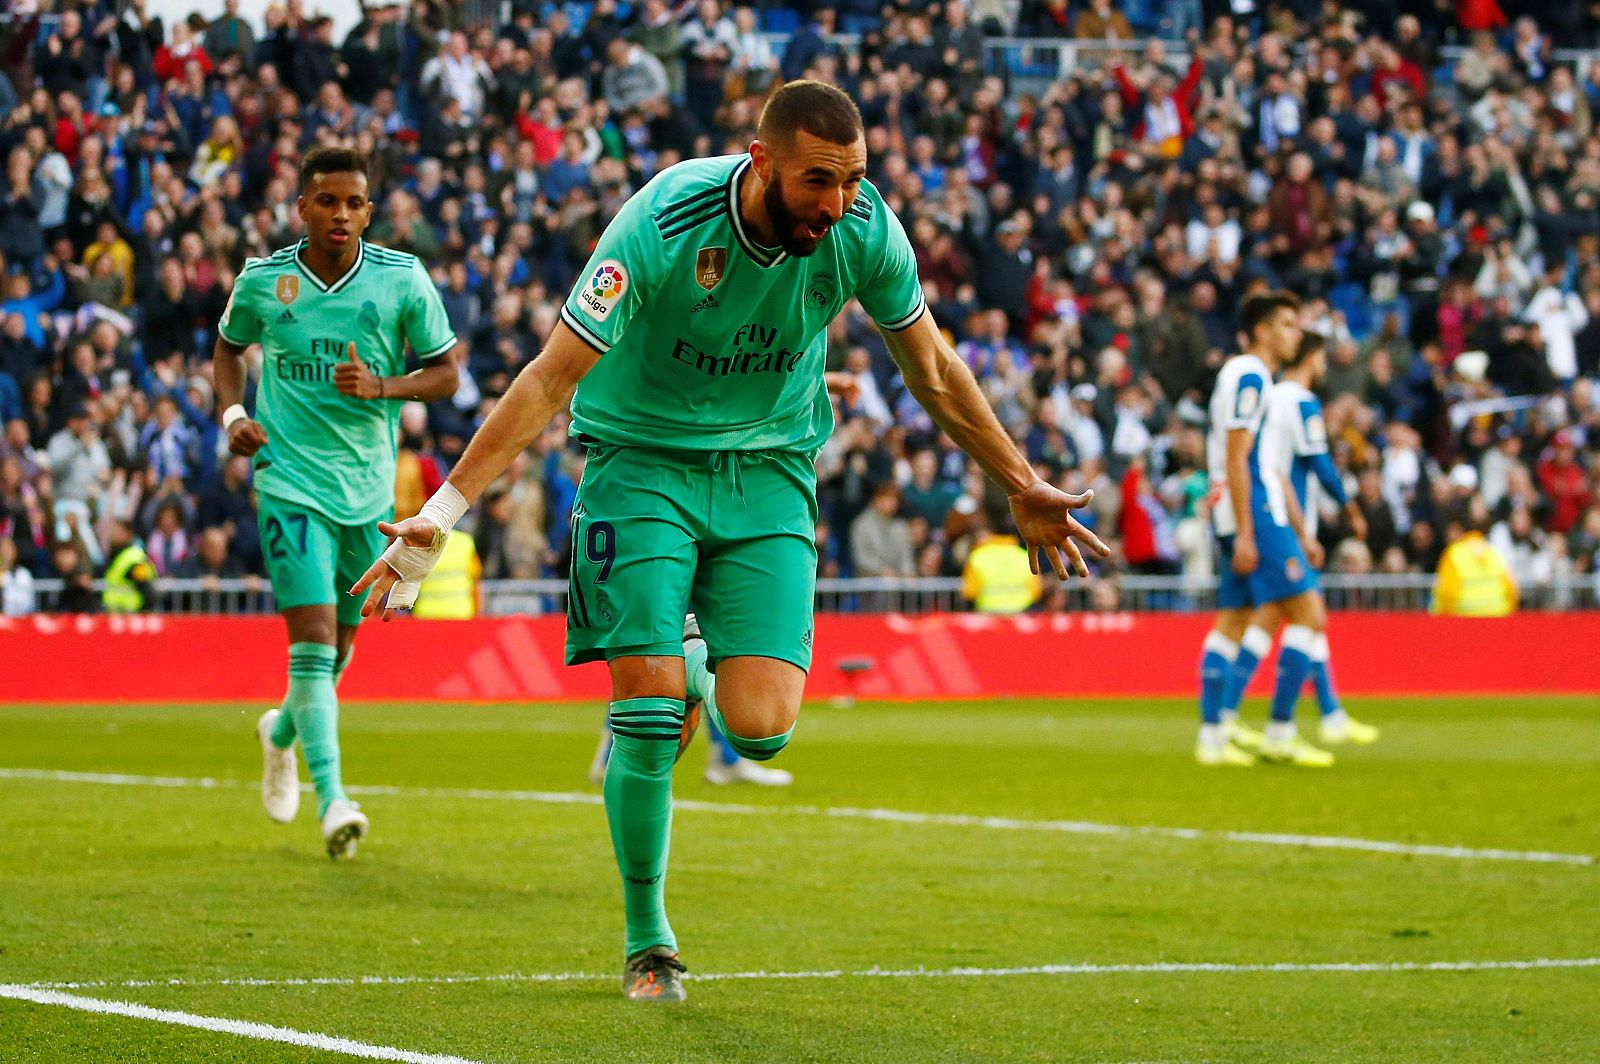 Benzema celebra su gol ante el Espanyol